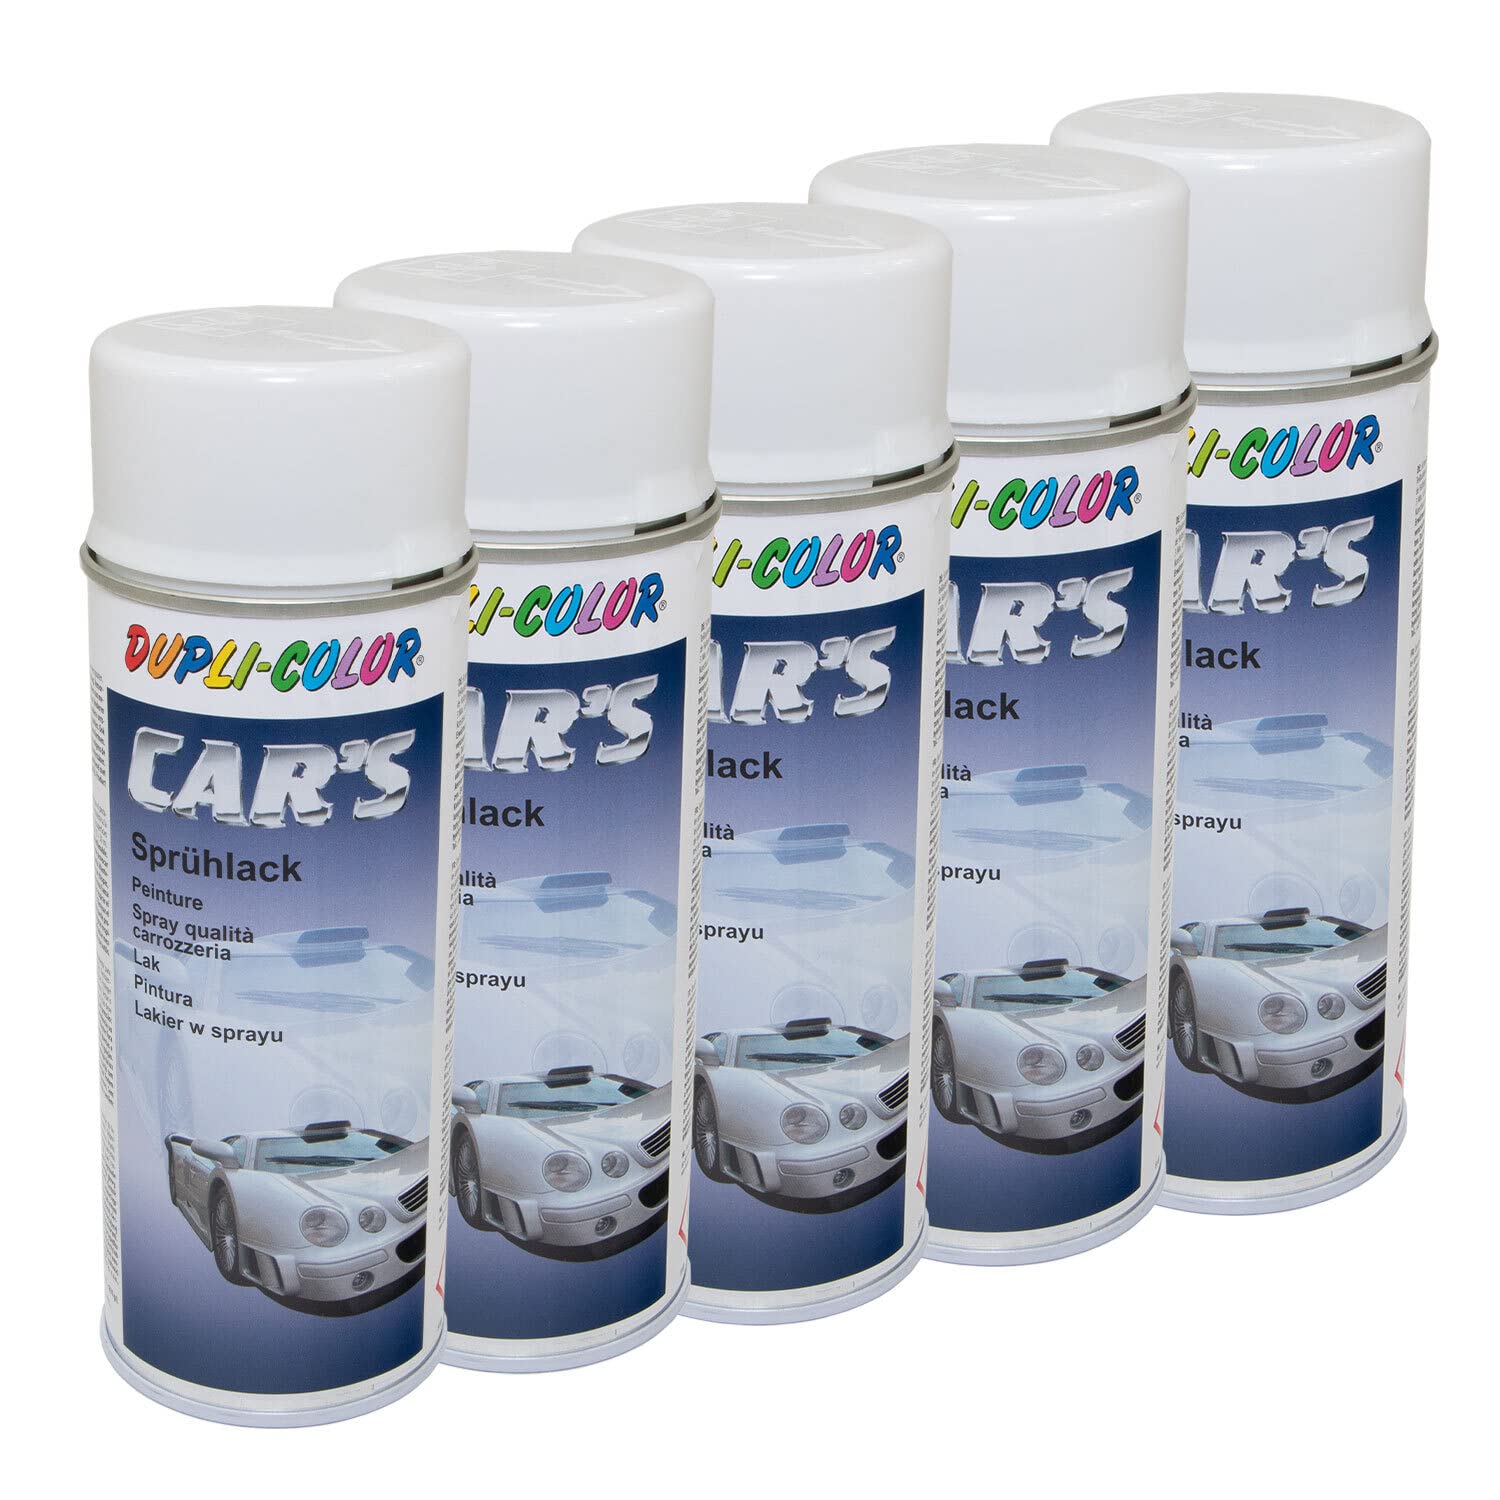 Lackspray Spraydose Sprühlack Cars Dupli Color 652233 weiss seidenmatt 5 X 400 ml von DUPLI_bundle